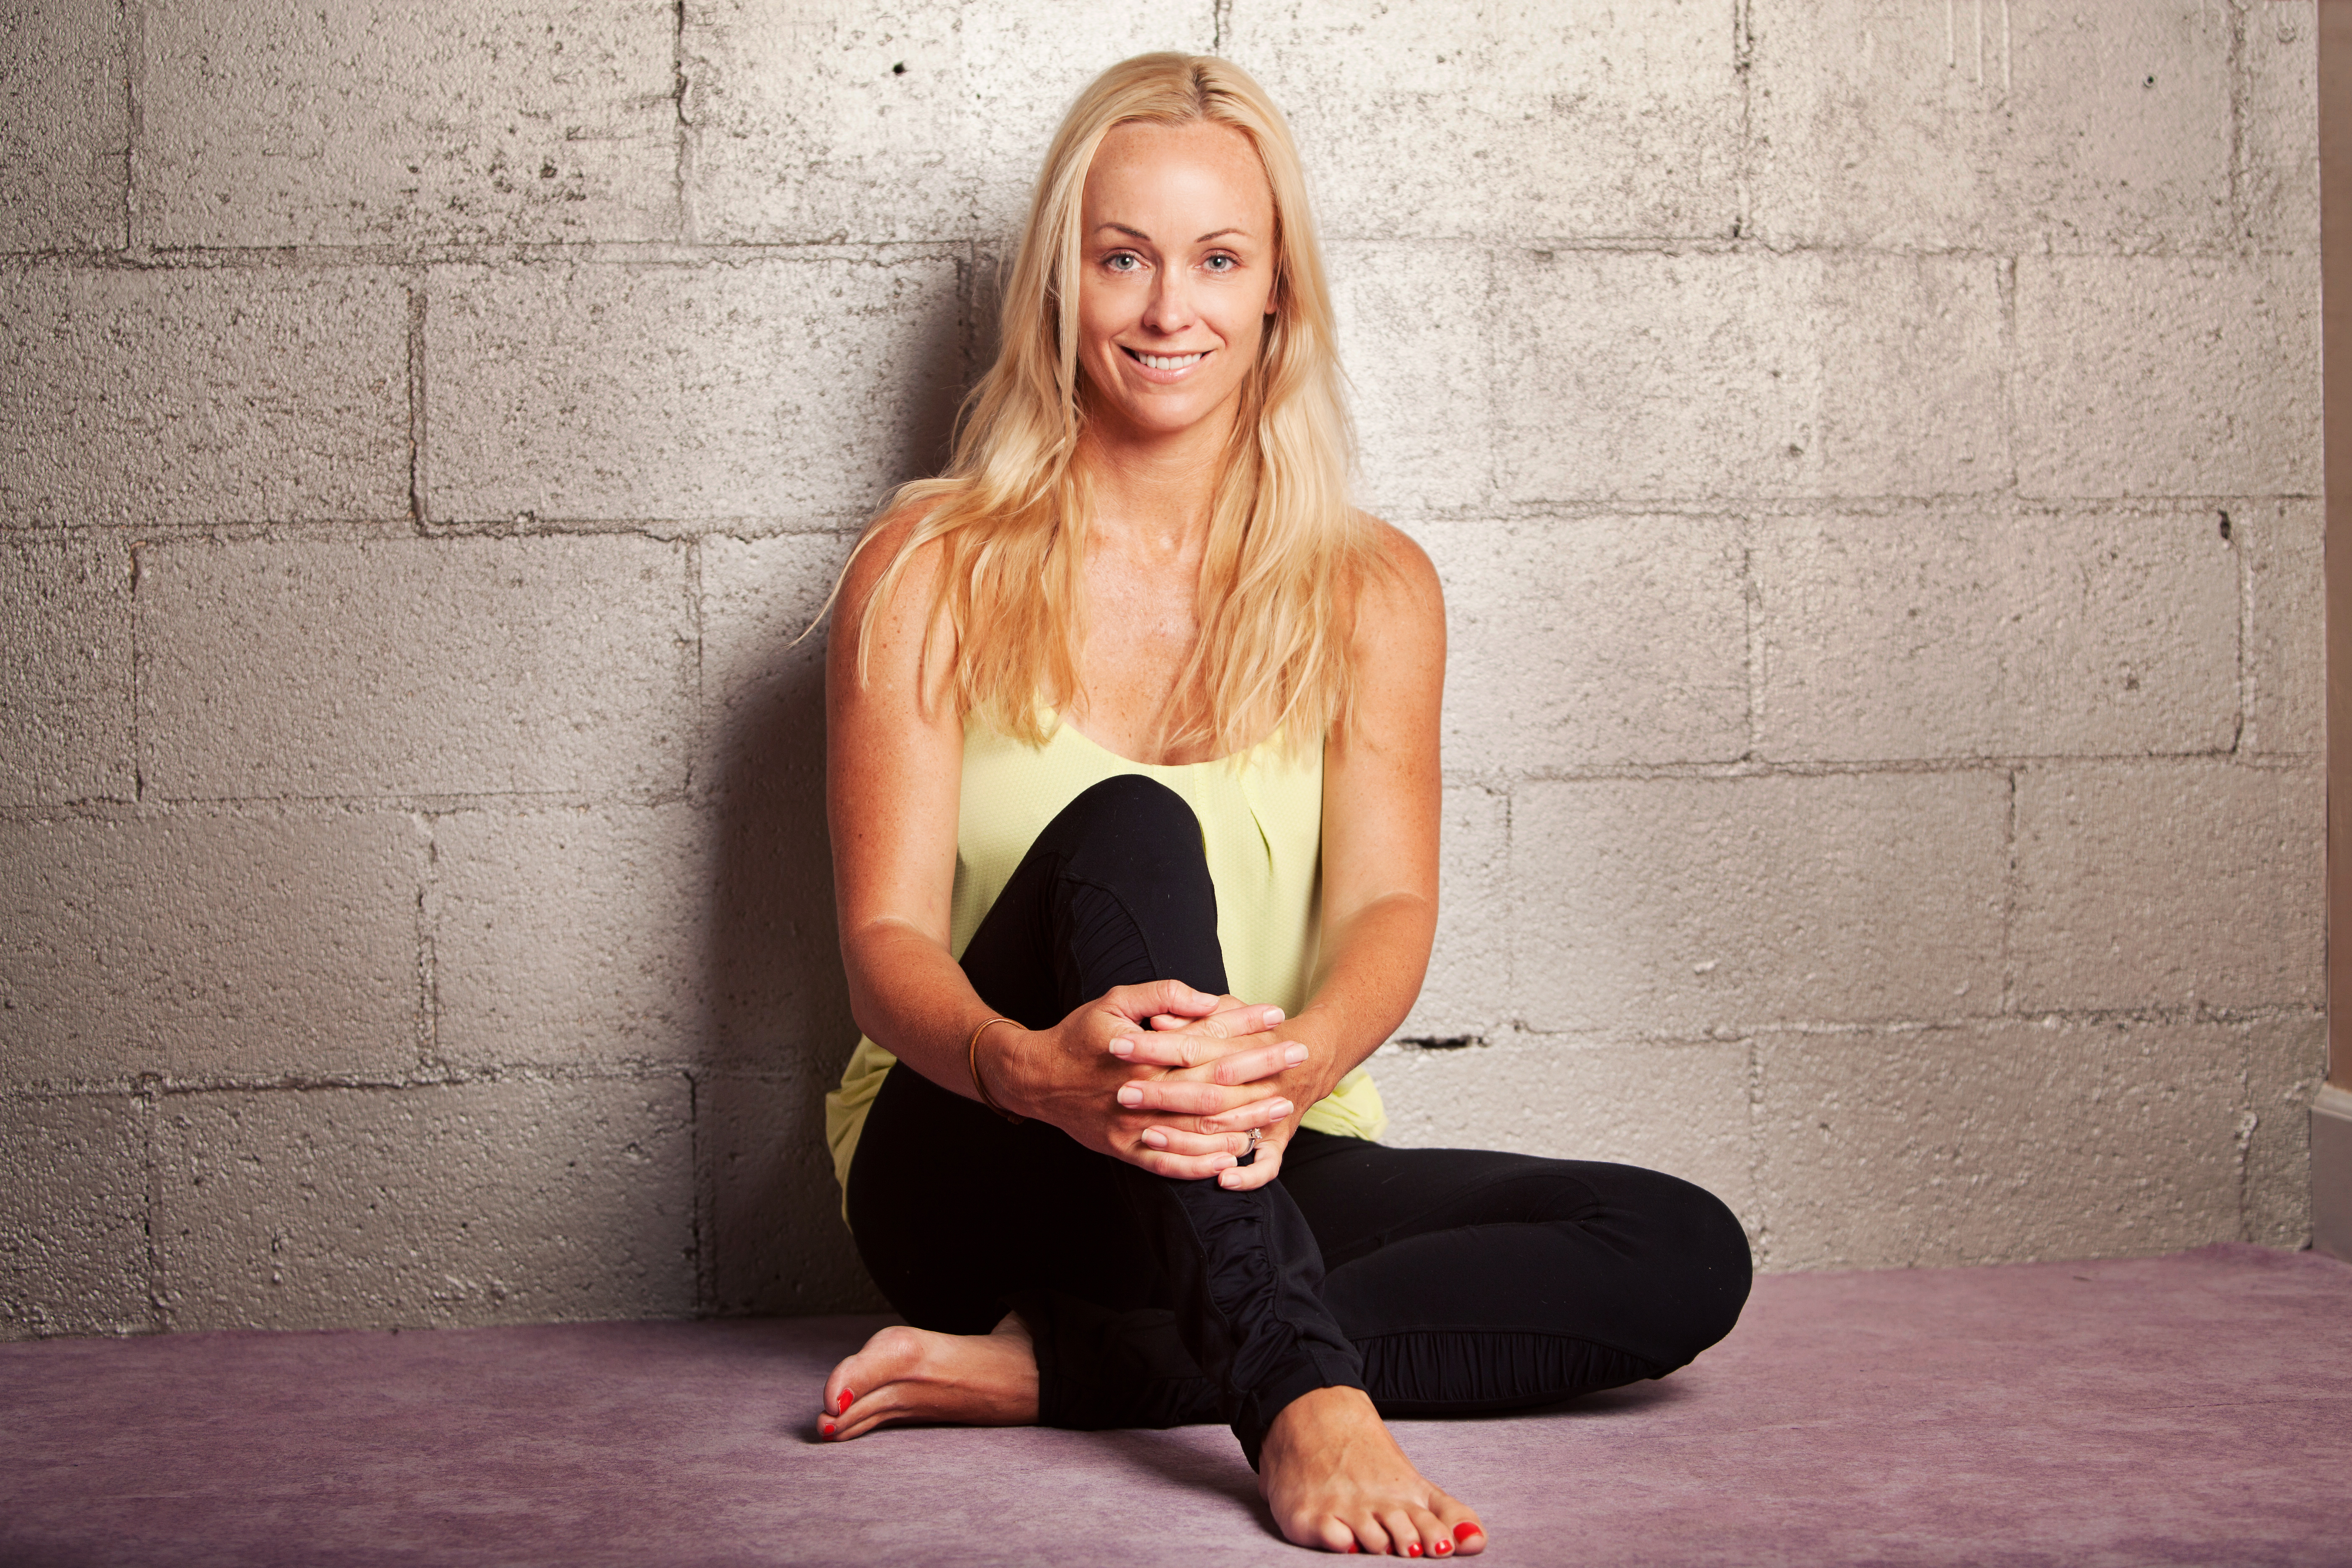 Meet Karlie Knight, a Bikram Yoga instructor opening a studio here in town ...